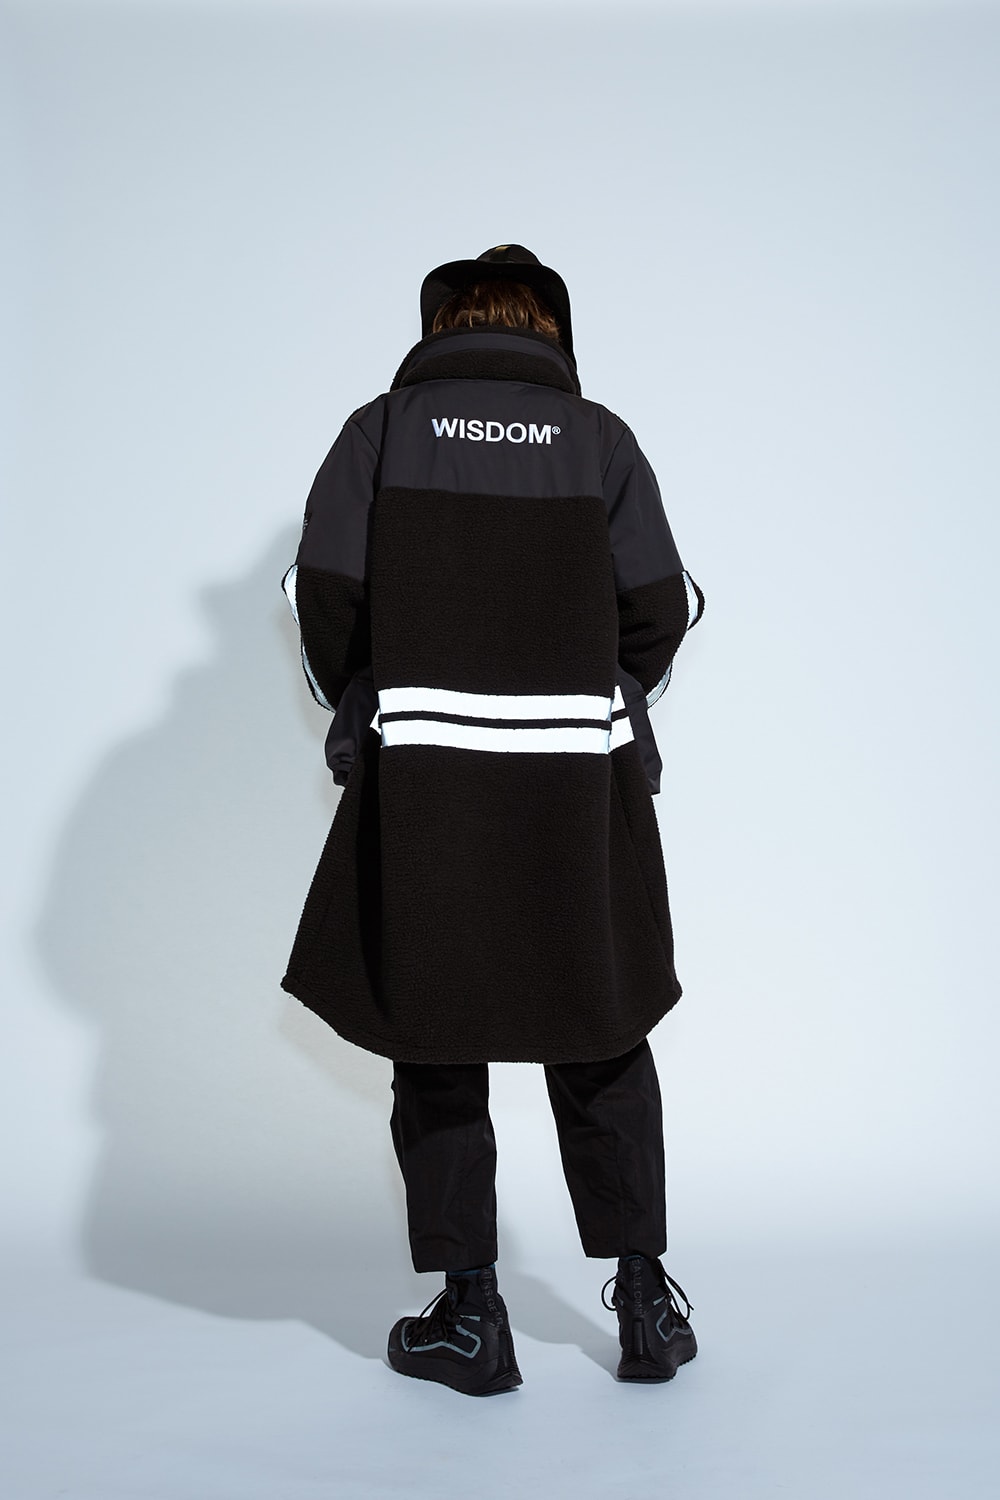 WISDOM® 2020 秋冬系列 Lookbook 正式發佈